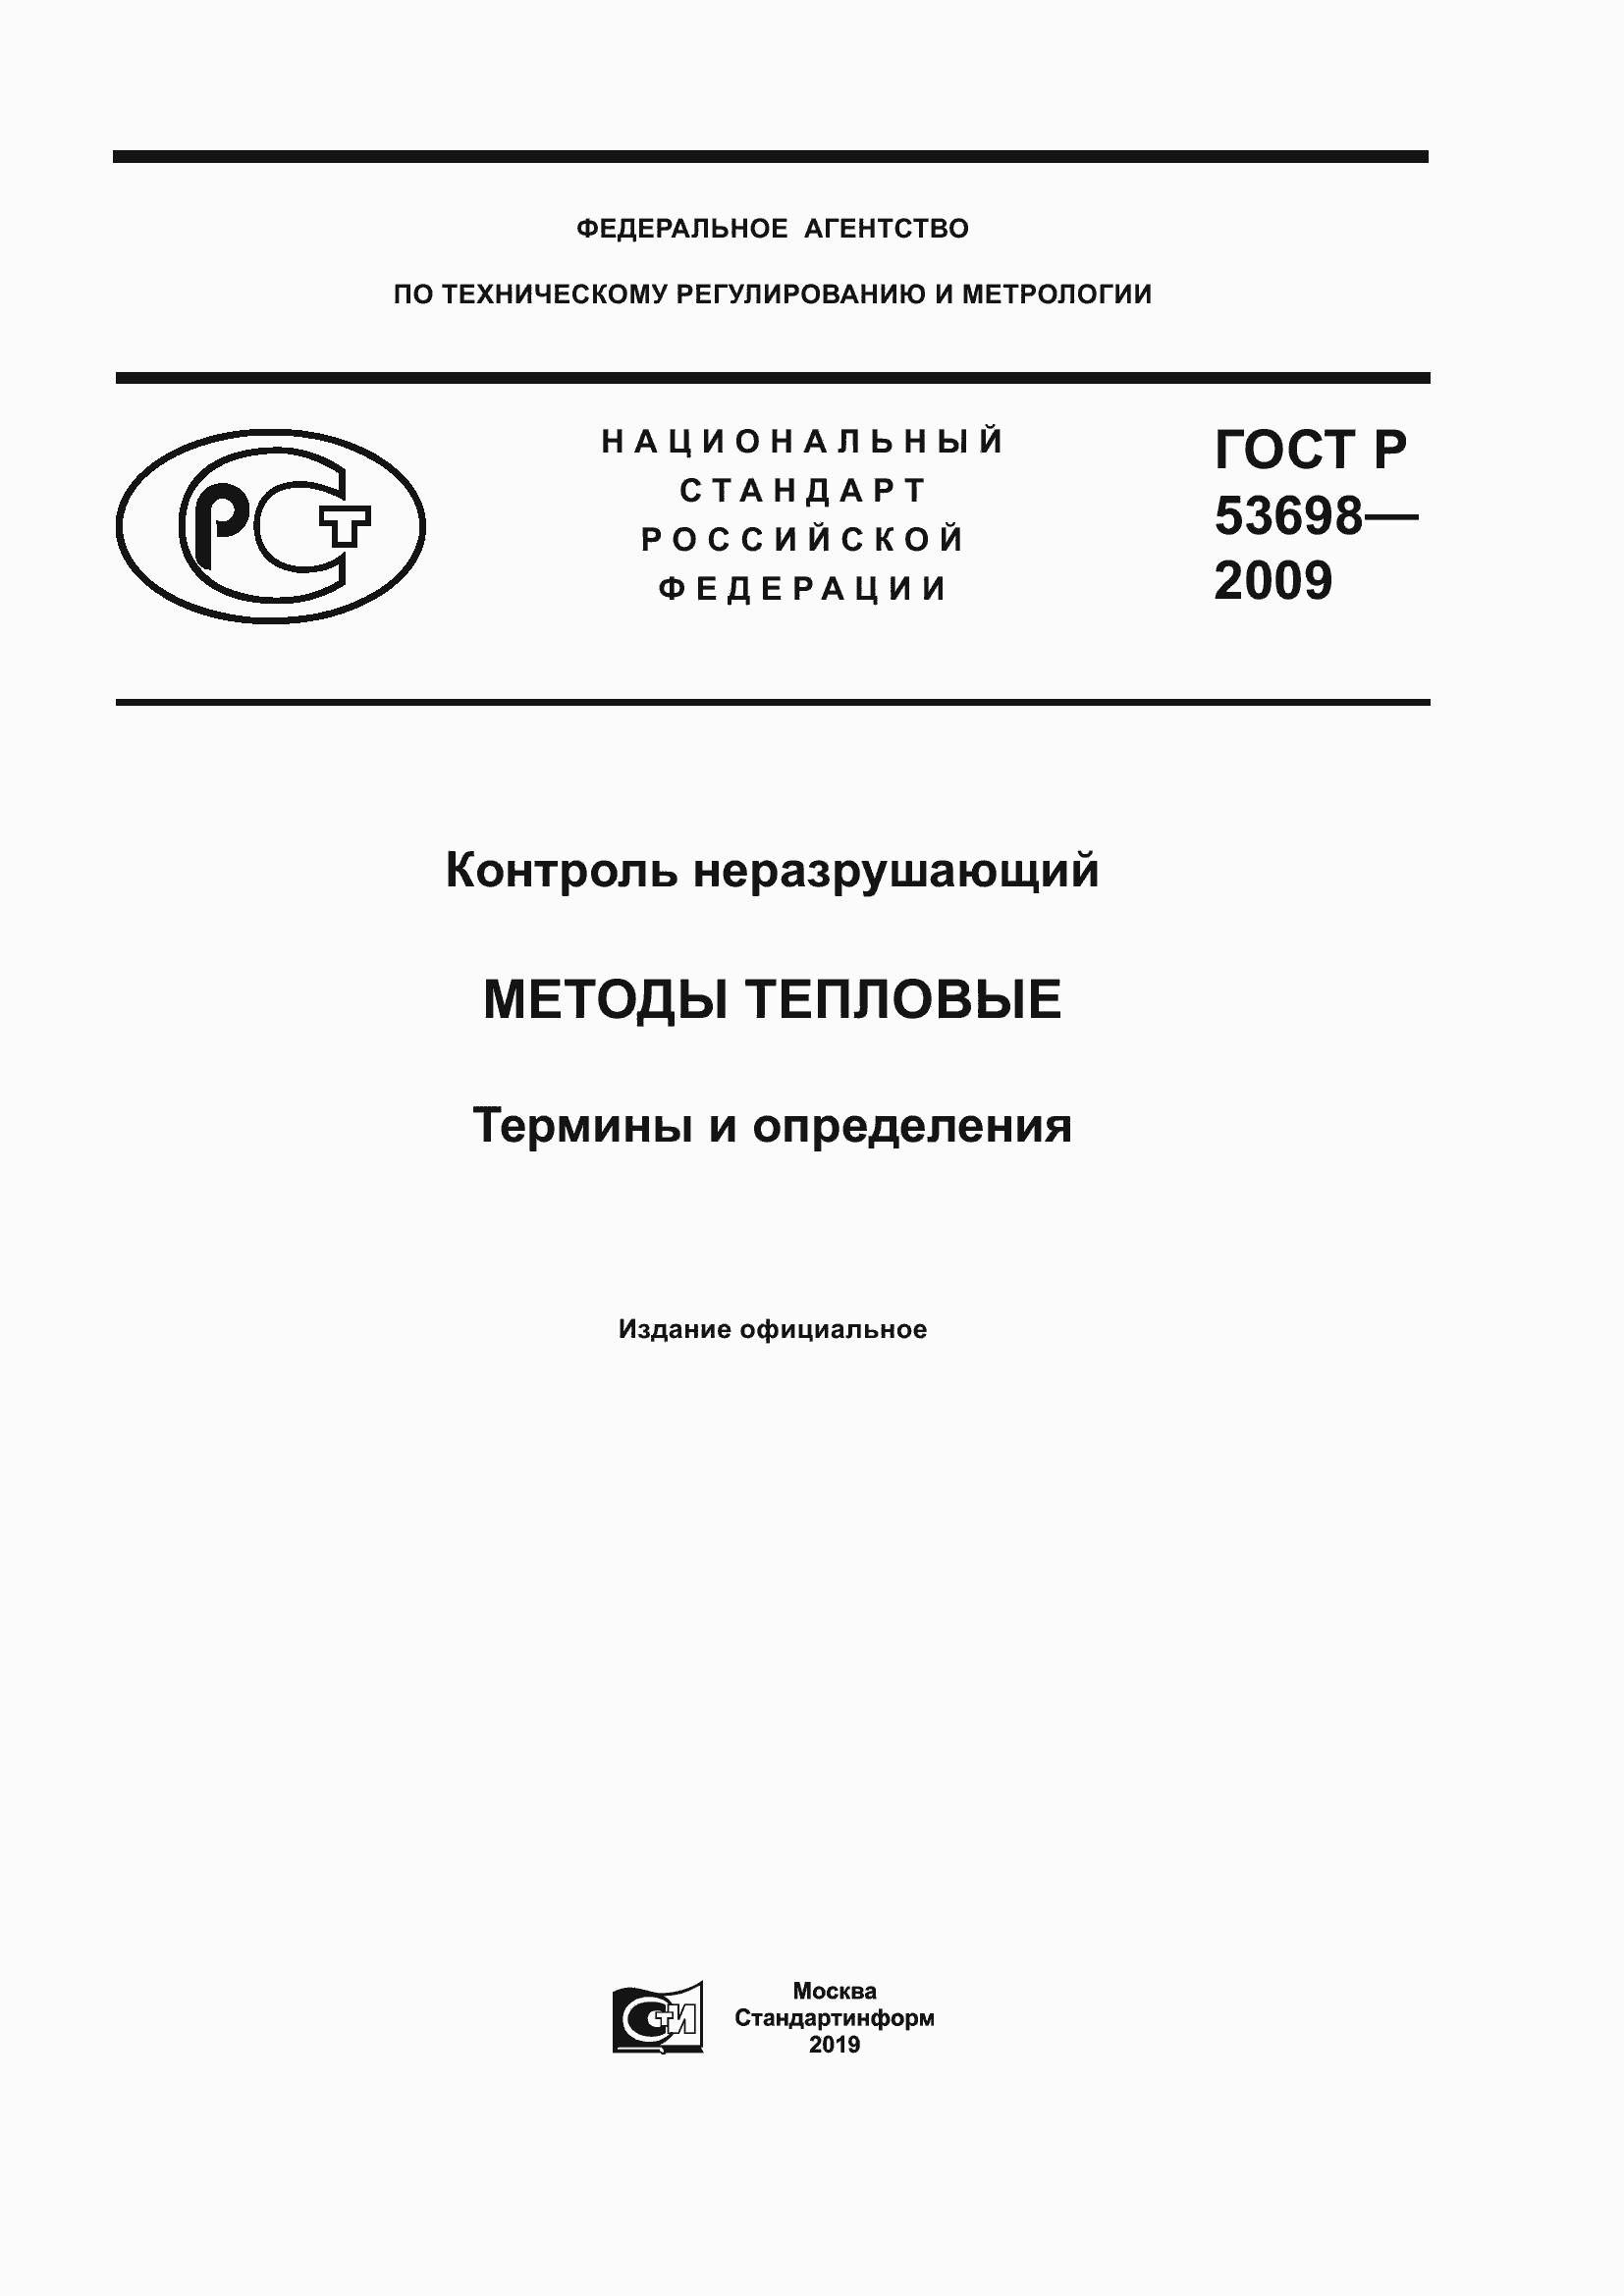 ГОСТ Р 53698-2009. Страница 1